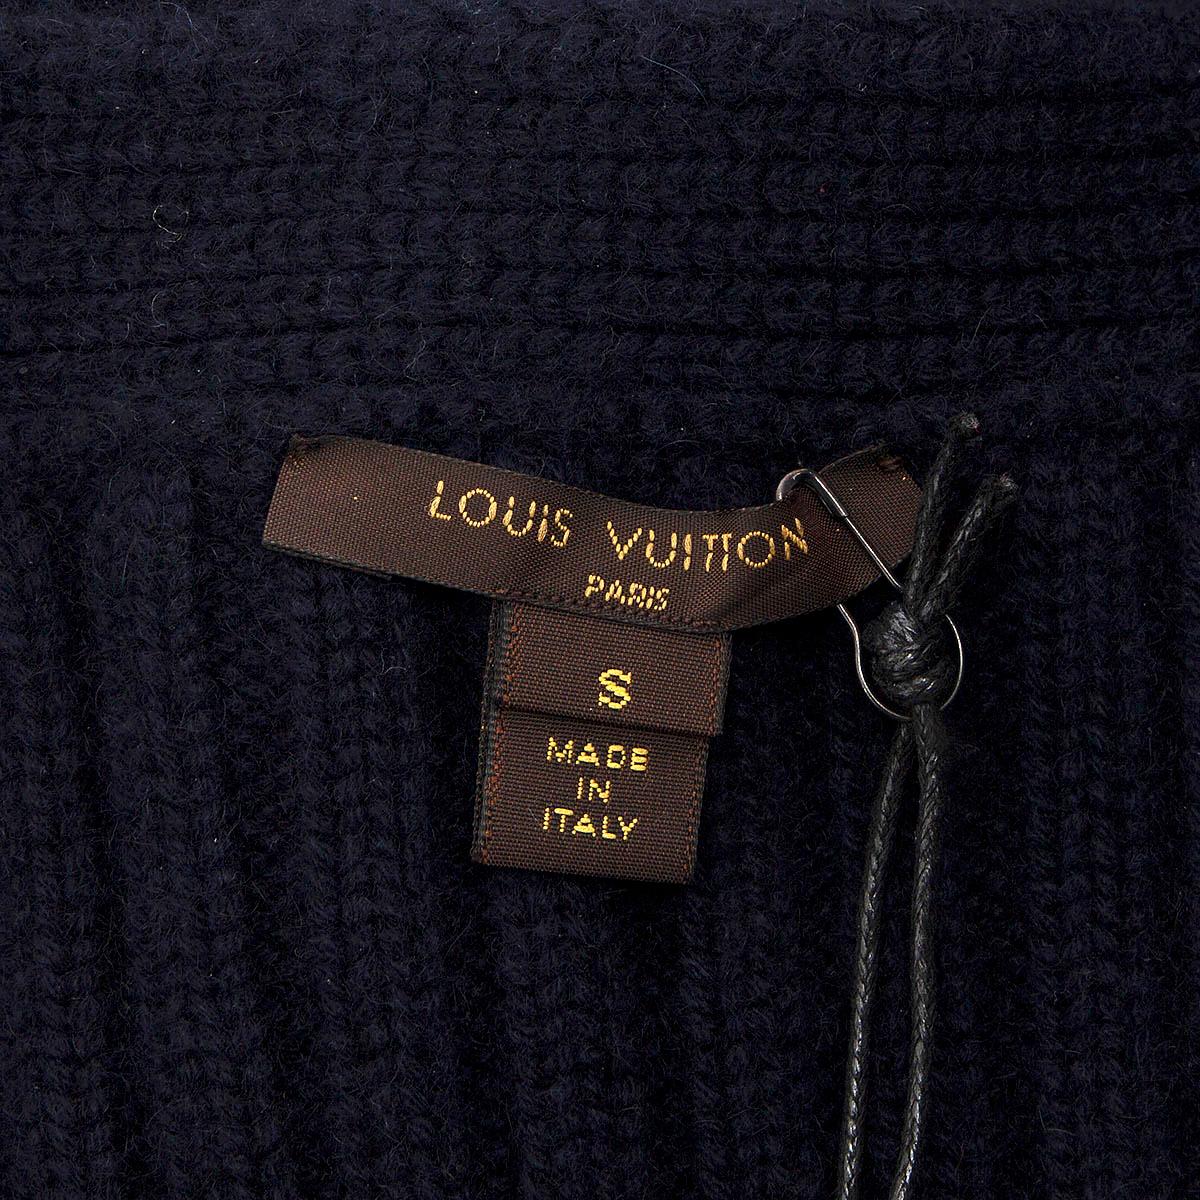 LOUIS VUITTON navy blue cashmere SEQUIN POCKETS Cardigan Sweater S For Sale 2